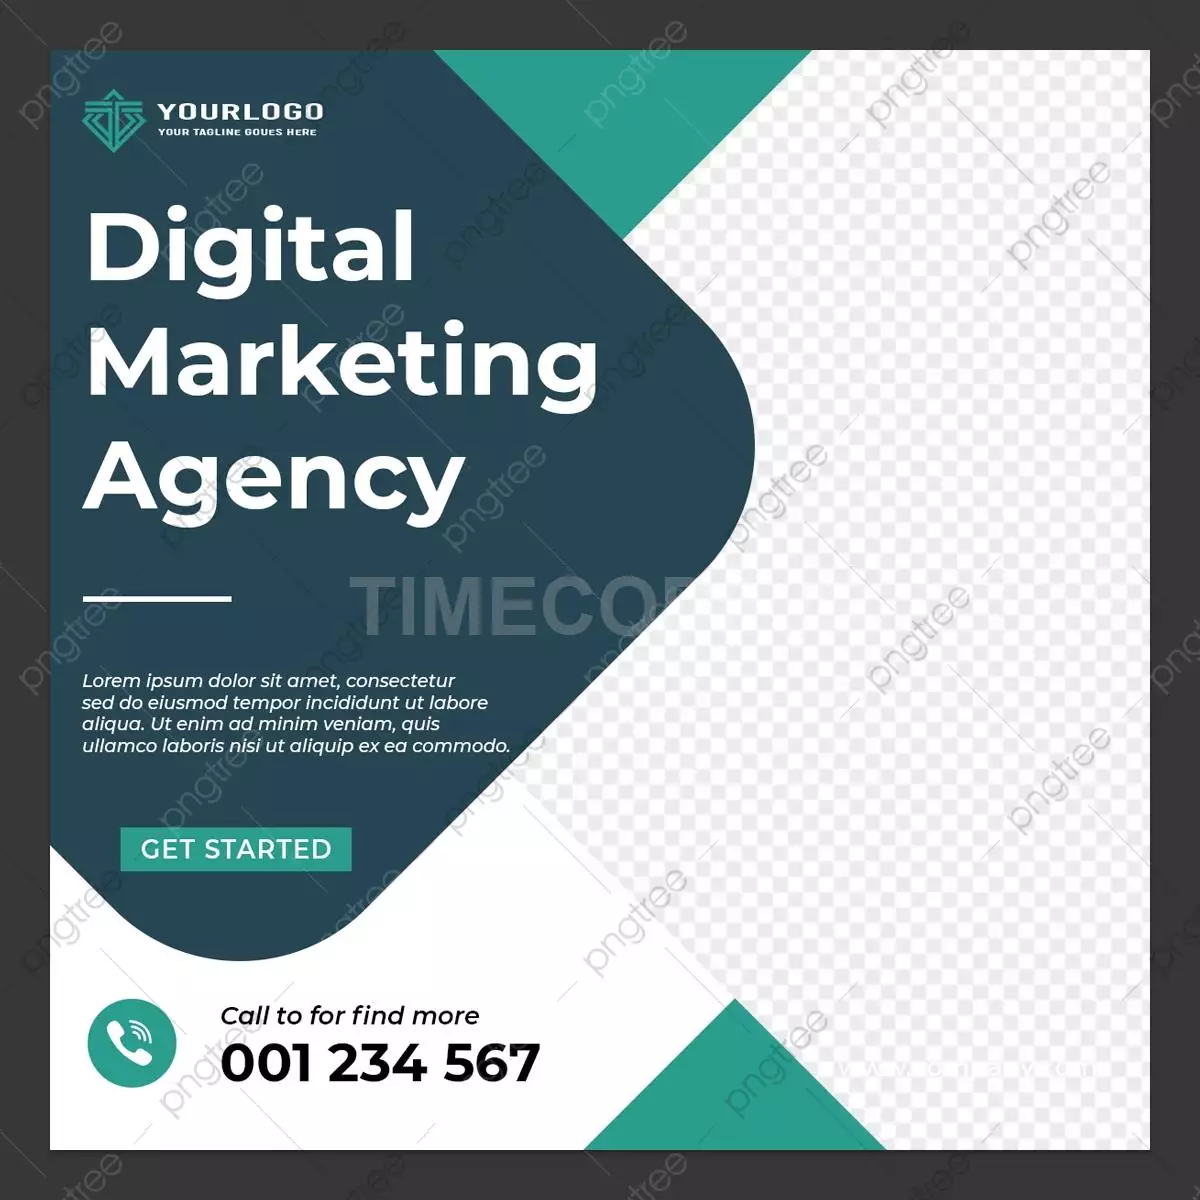 Digital Marketing Agency Social Media Post Template Download on Pngtree